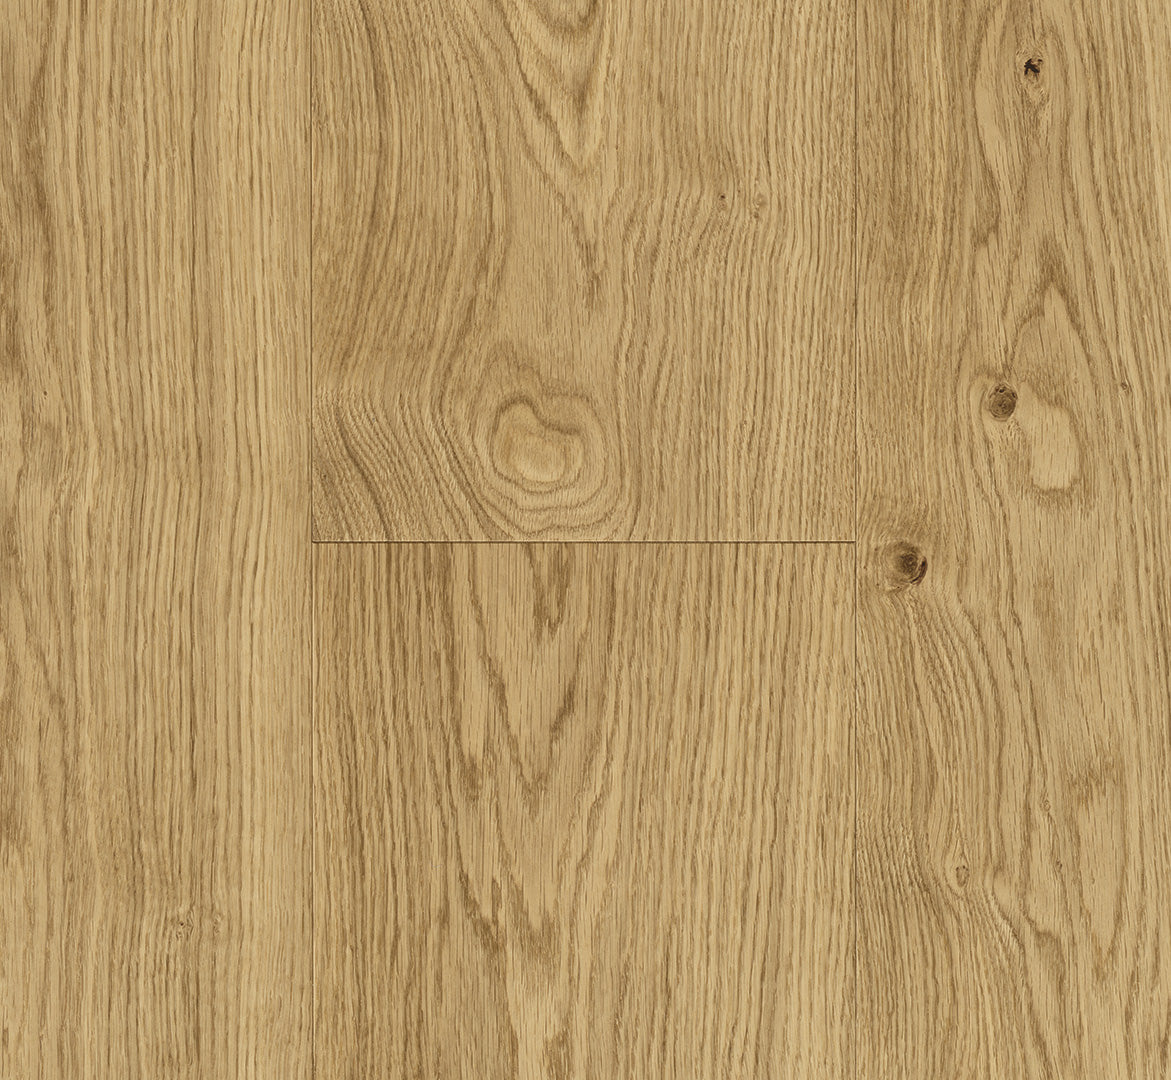 Oak Brushed Basic 11-5 Extra-sized Wideplank Matt Lacquer (2380 x 233 x 11.5 mm)